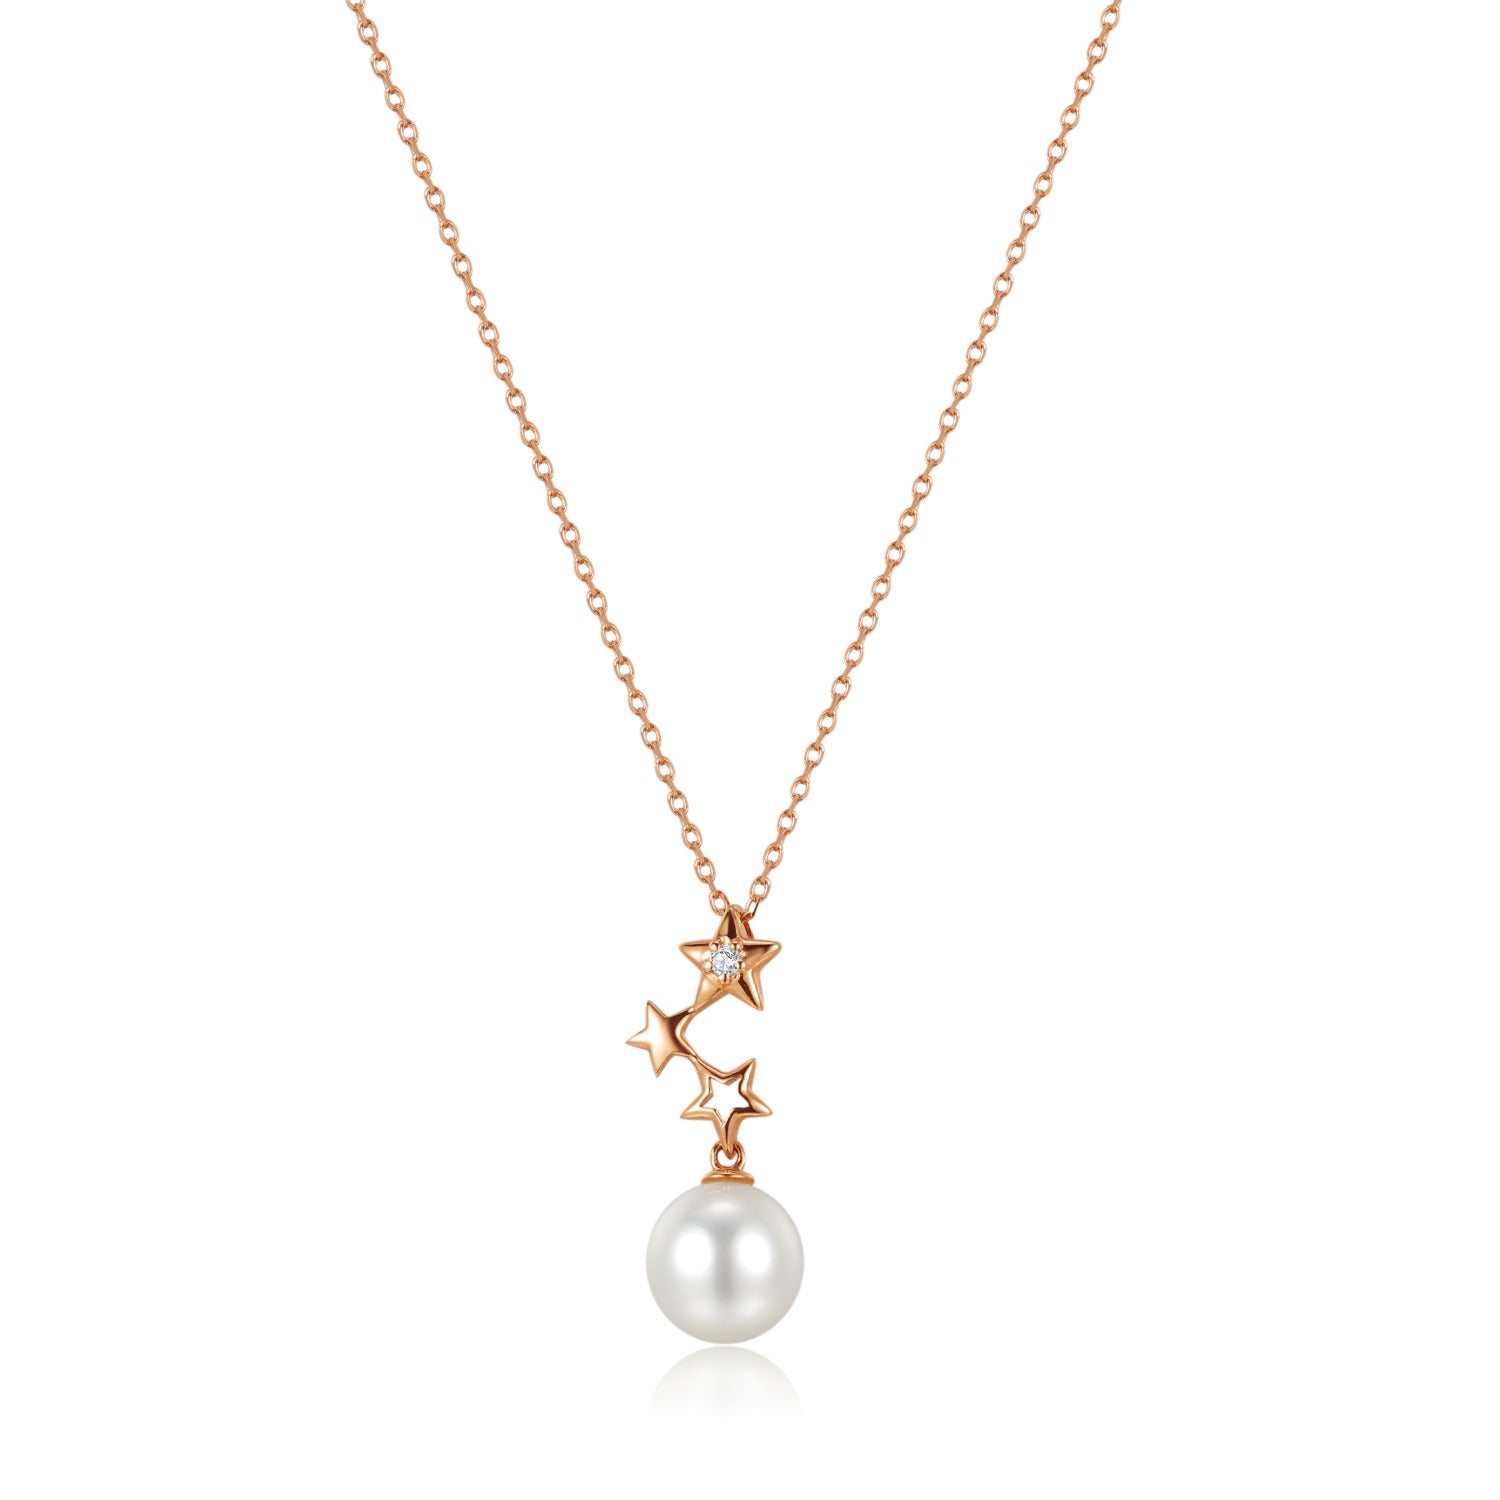 18k diamonds "Interwoven" Pearl Necklace